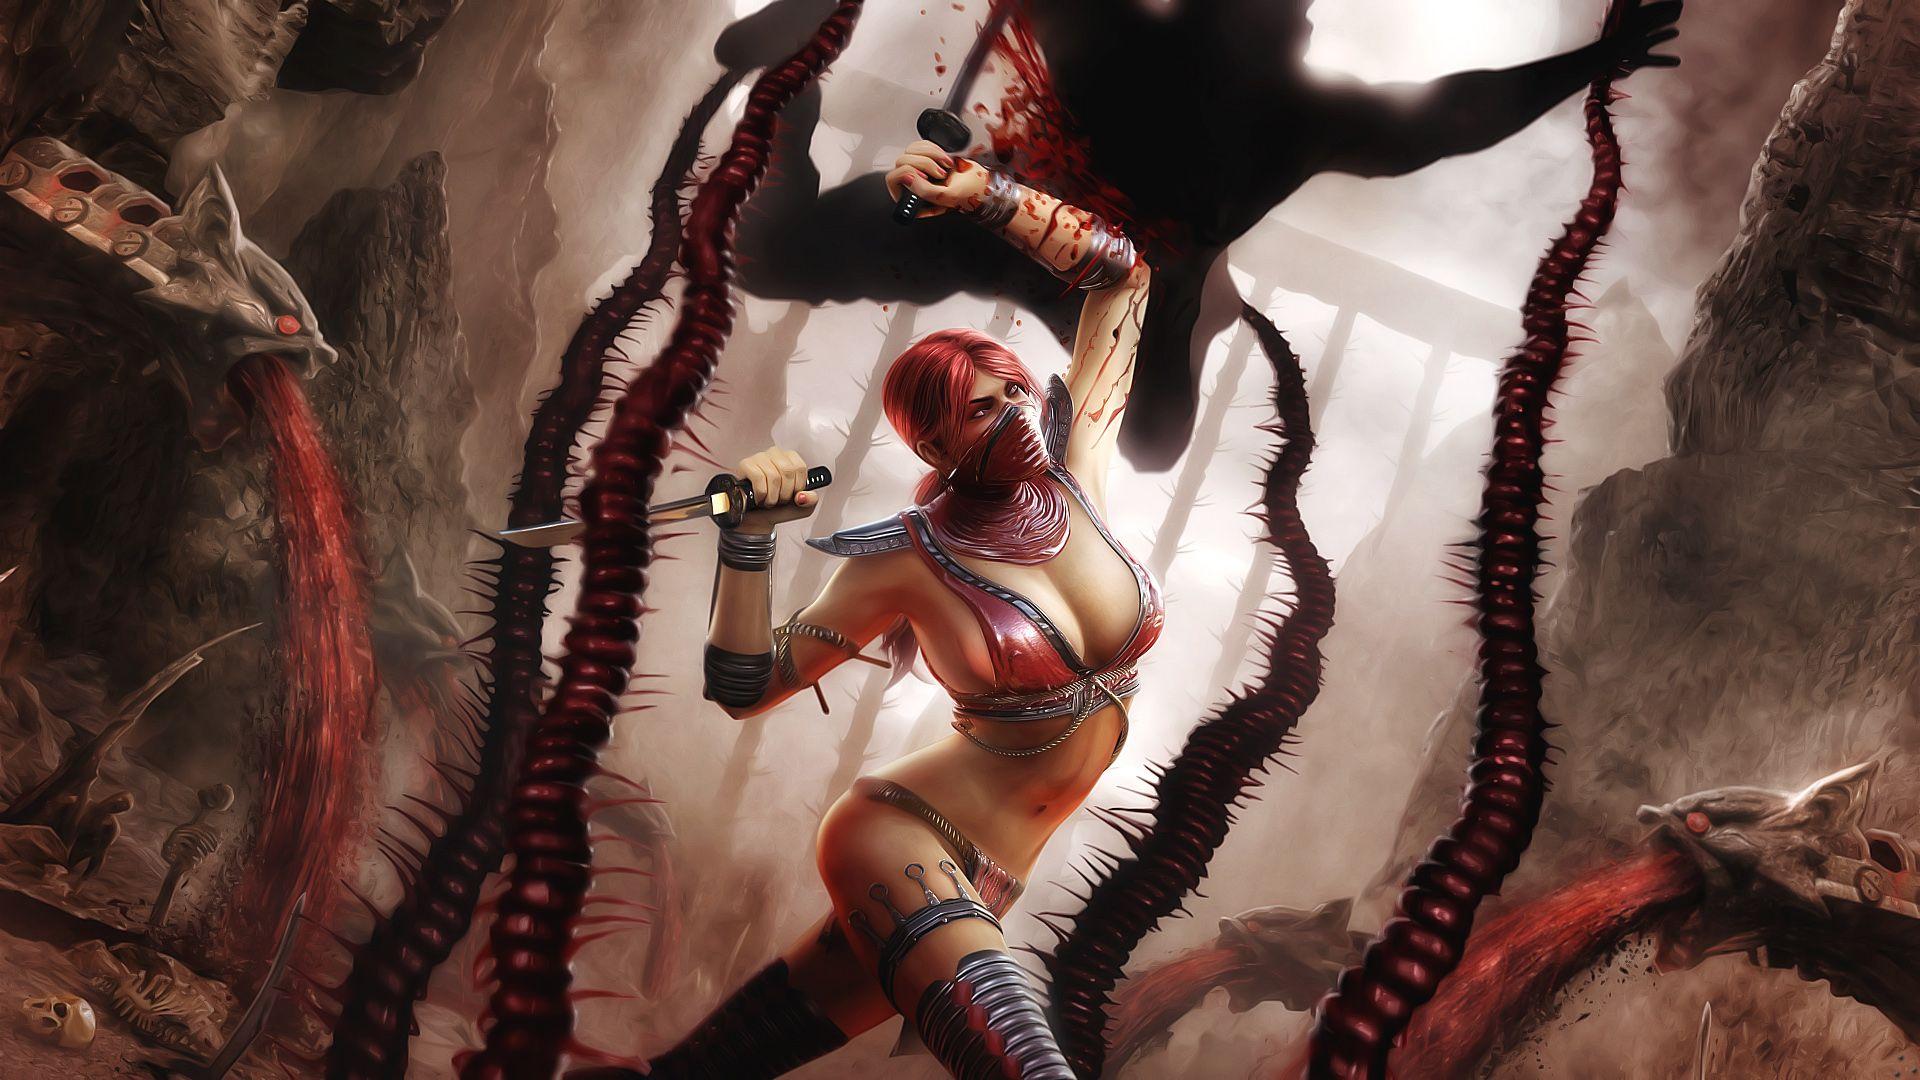 Skarlet in Mortal Kombat Wallpaper